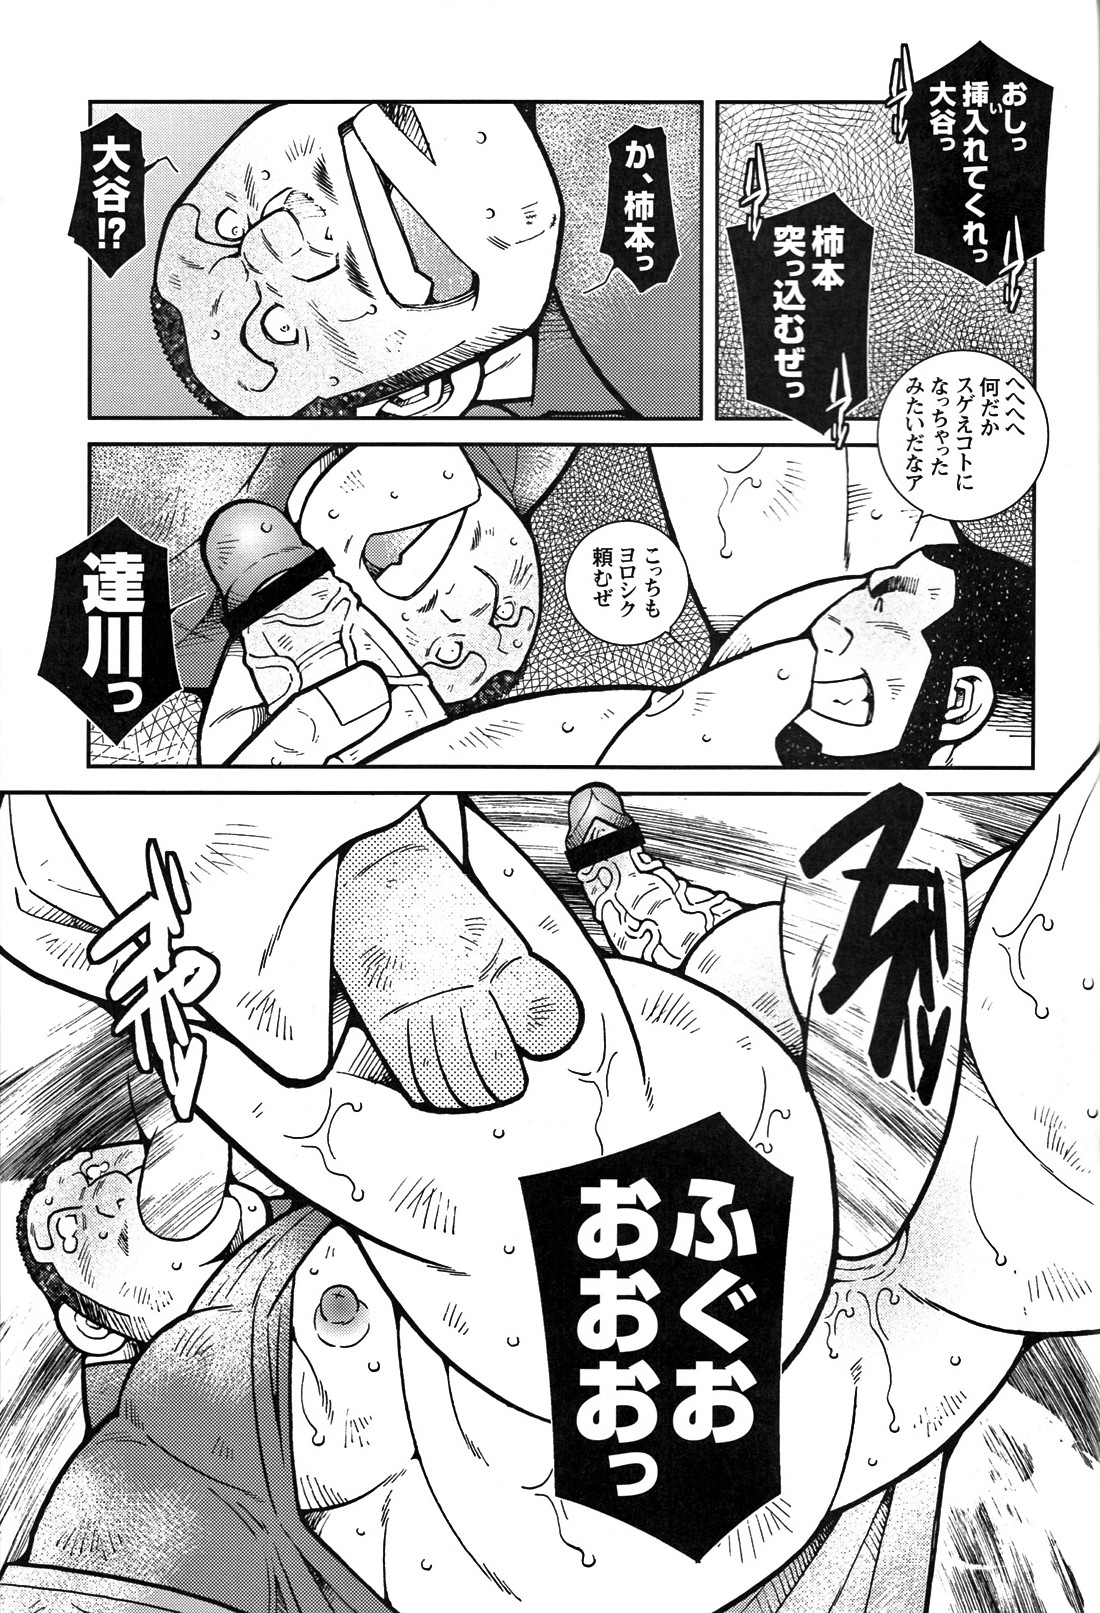 Comic G-men Gaho No.05 